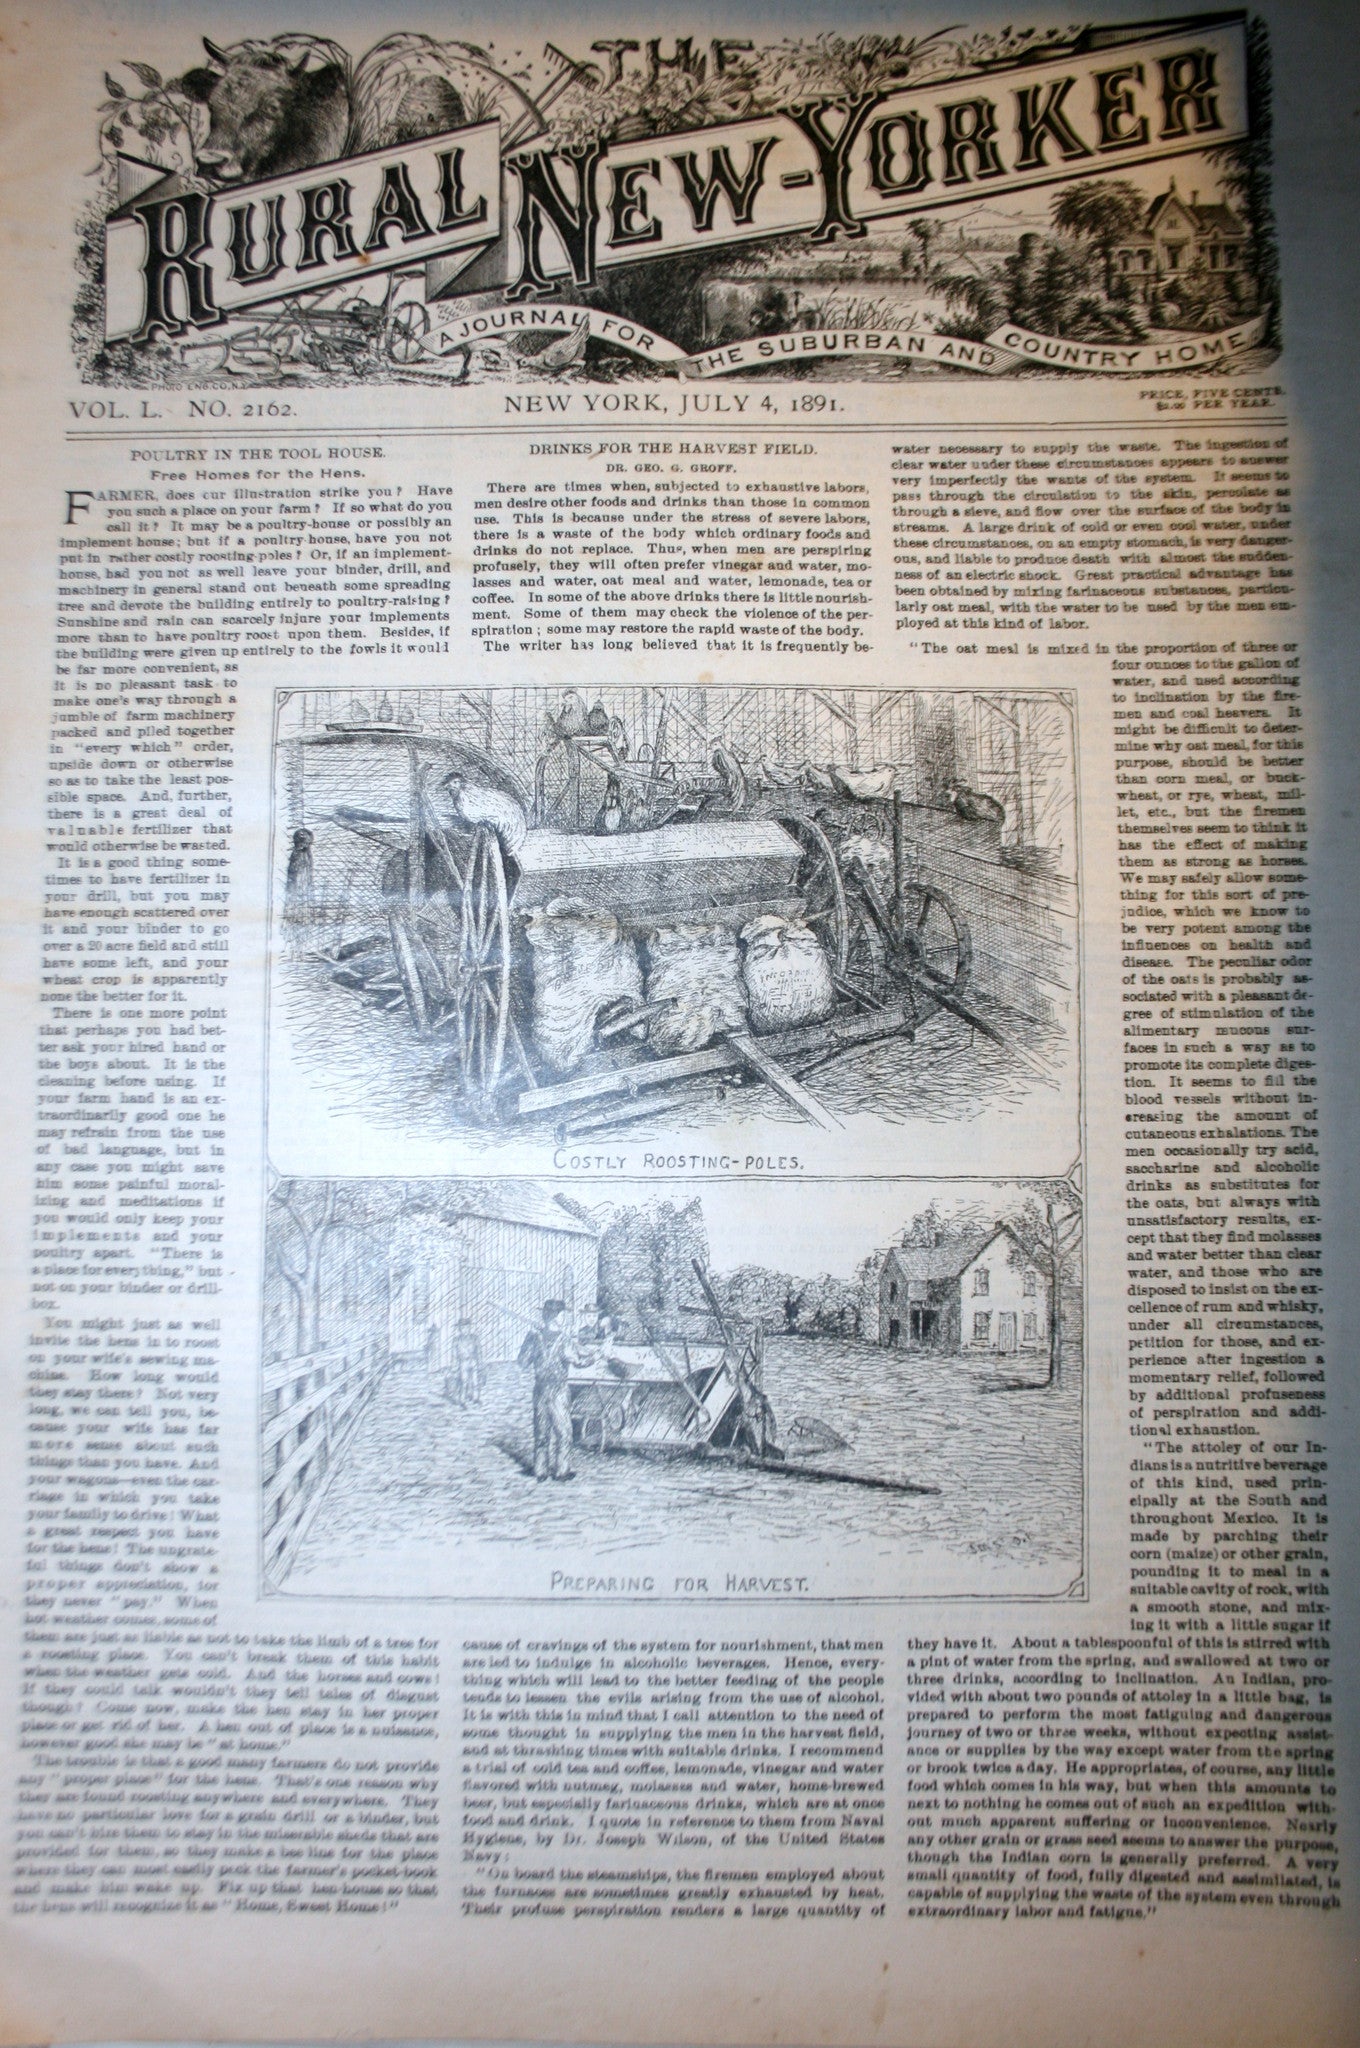 07 04 1891 NEWS Rural New-Yorker